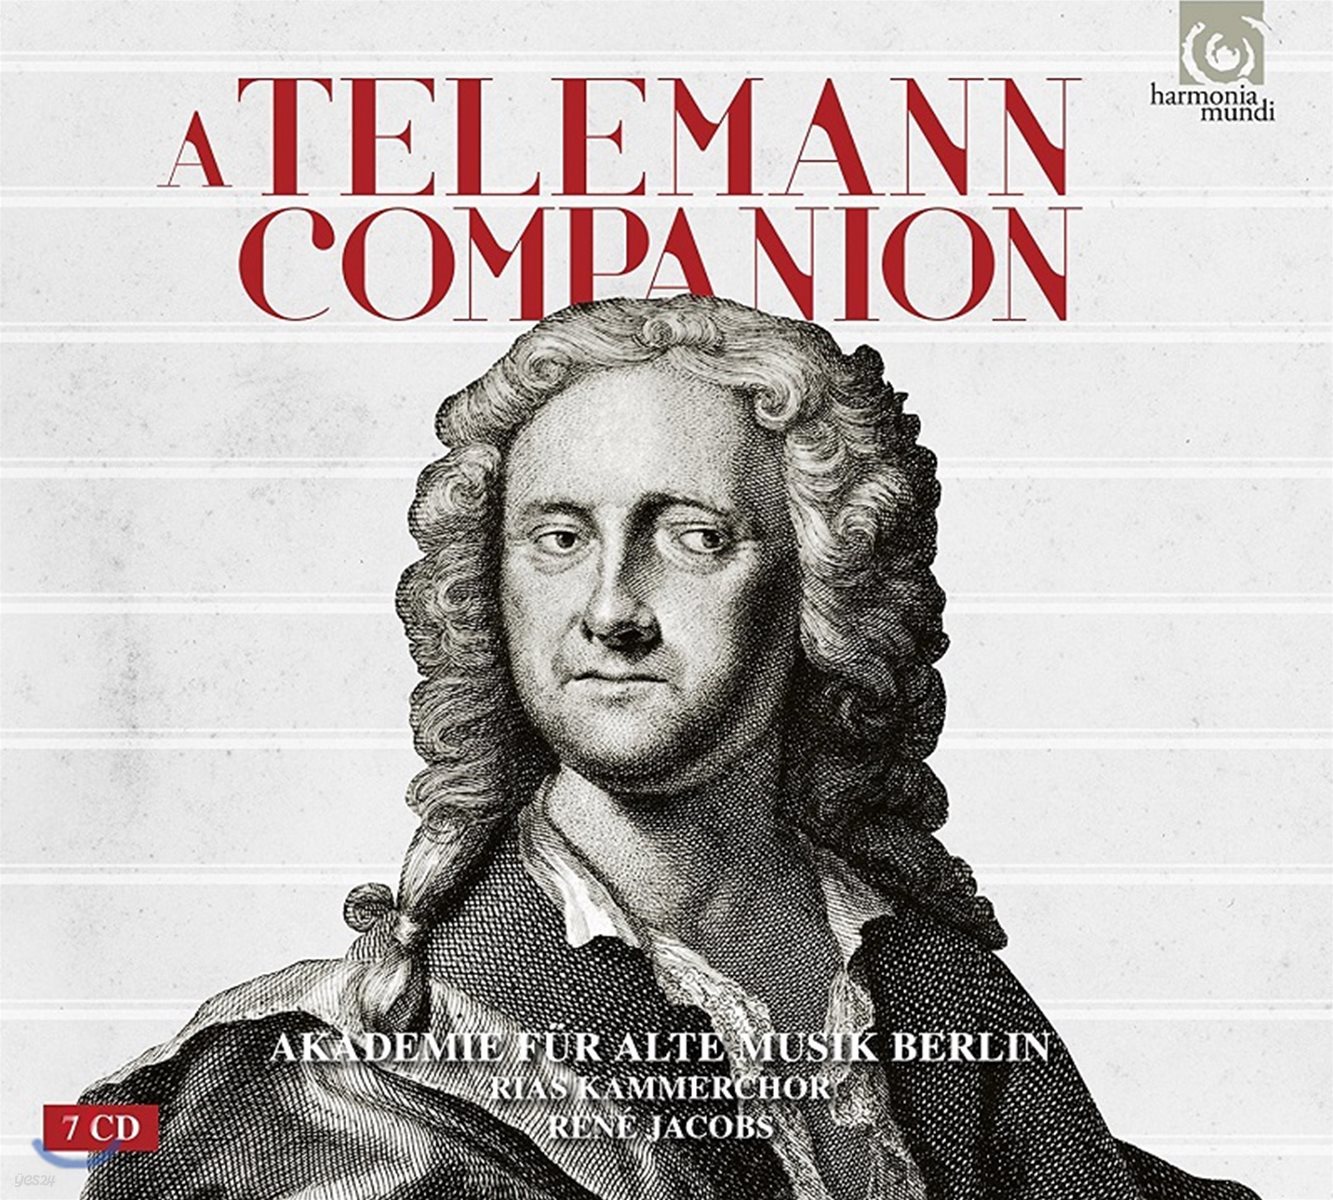 Rene Jacobs 텔레만 입문: 사후 25주년 특별 7CD 박스 - 르네 야콥스, 베를린 고음악 아카데미 (A Telemann Companion)